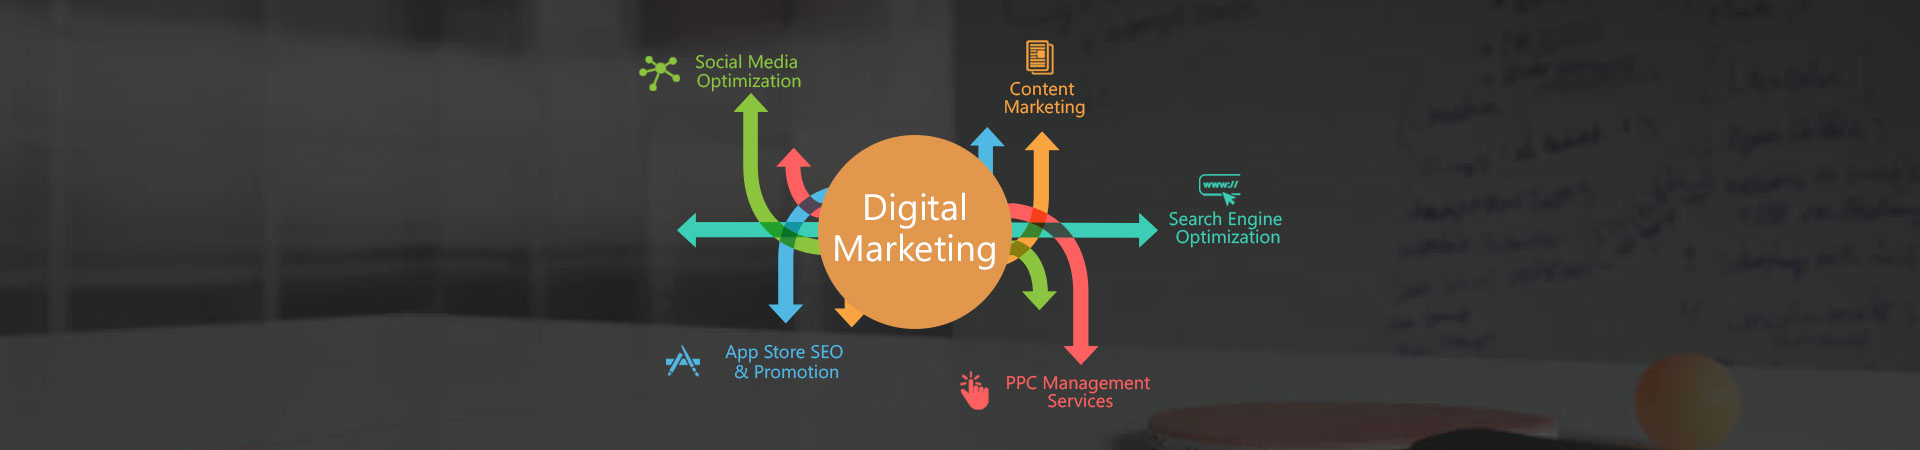 digital_marketing-link-dev